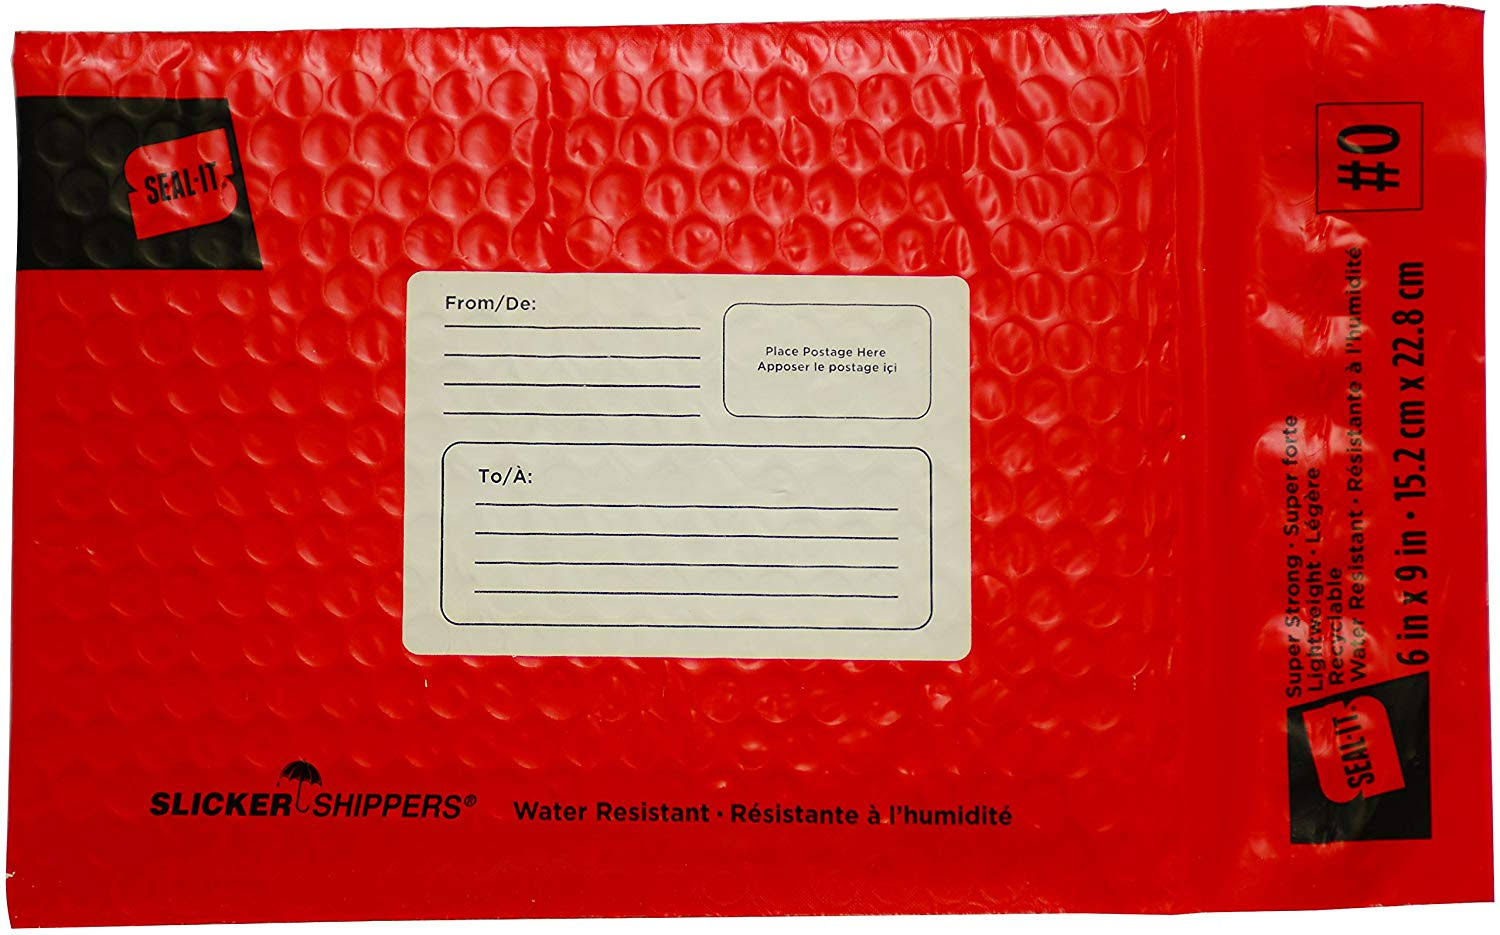 Seal-It Slicker Shipper Plastic Bubble Mailer 15cm x 23cm | General | 30 Day Money Back Guarantee | Best Price Guarantee | Delivery Guaranteed